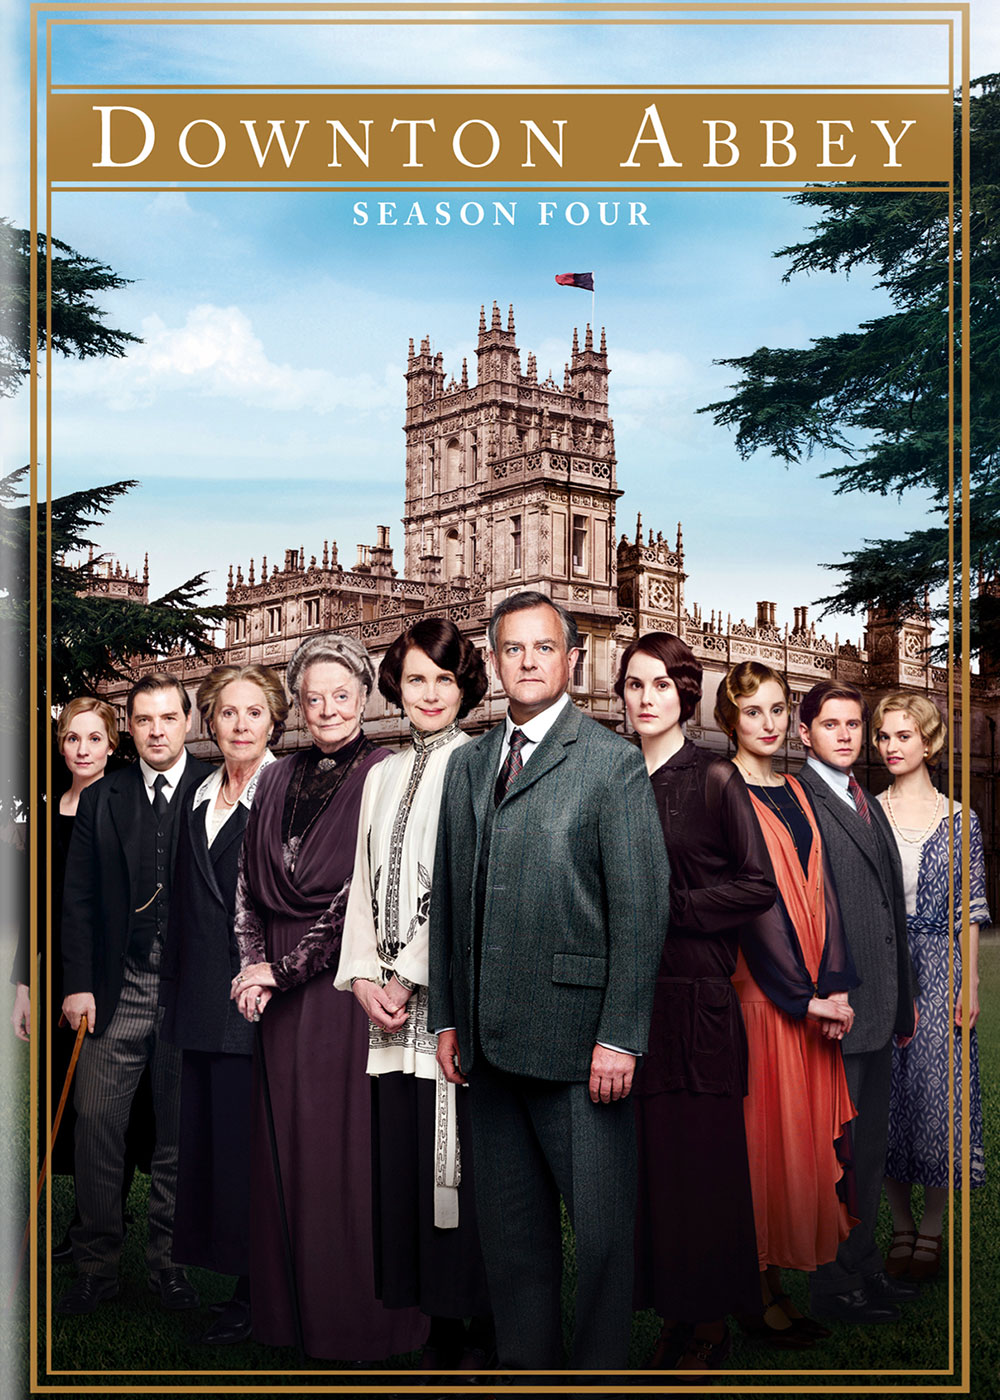 Downton Abbey Season 4 TV Series (2015) | Release Date